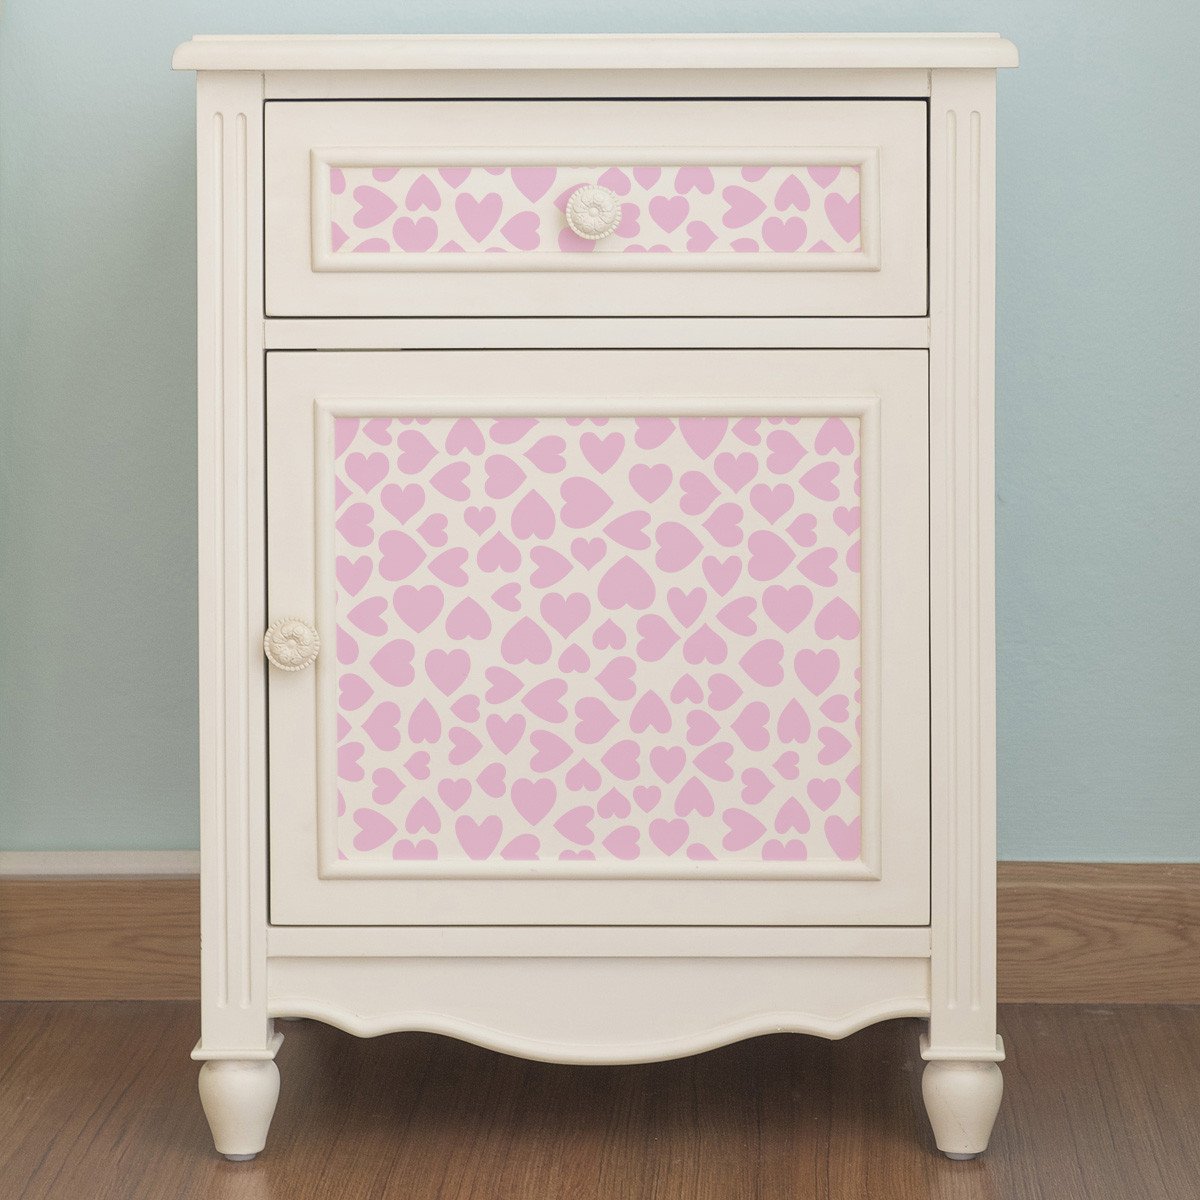 CraftStar Hearts Seamless Pattern Stencil on Furniture